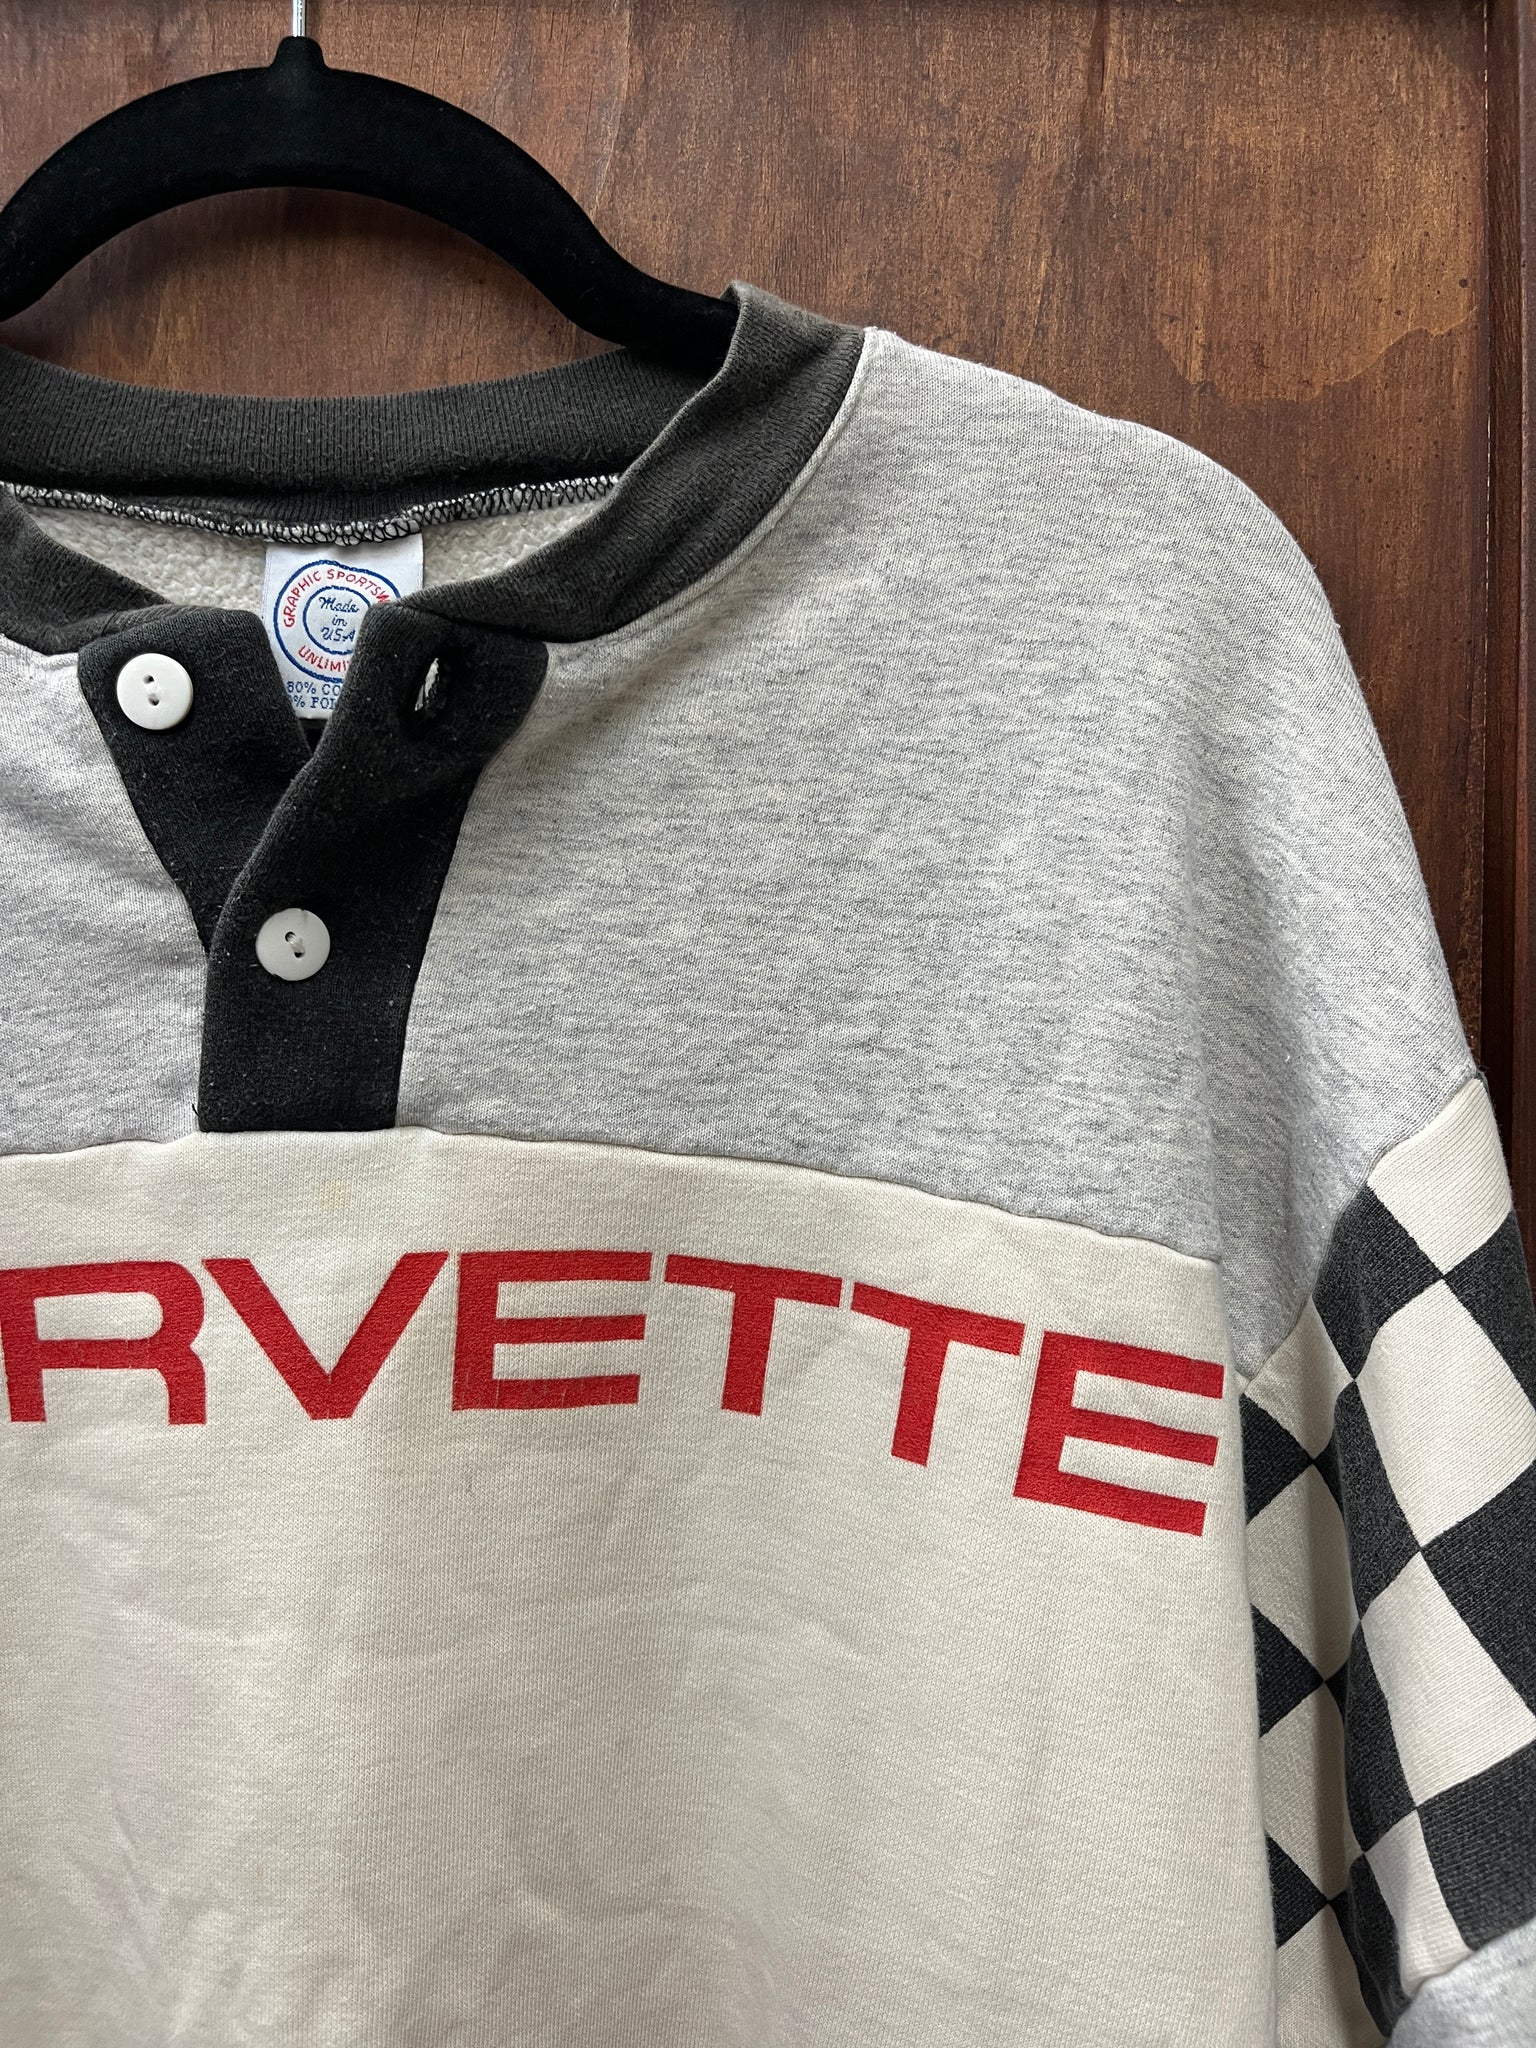 1980s TSHIRT-SWEATSHIRT- Graphic Sportswear-Corvette checkerboard